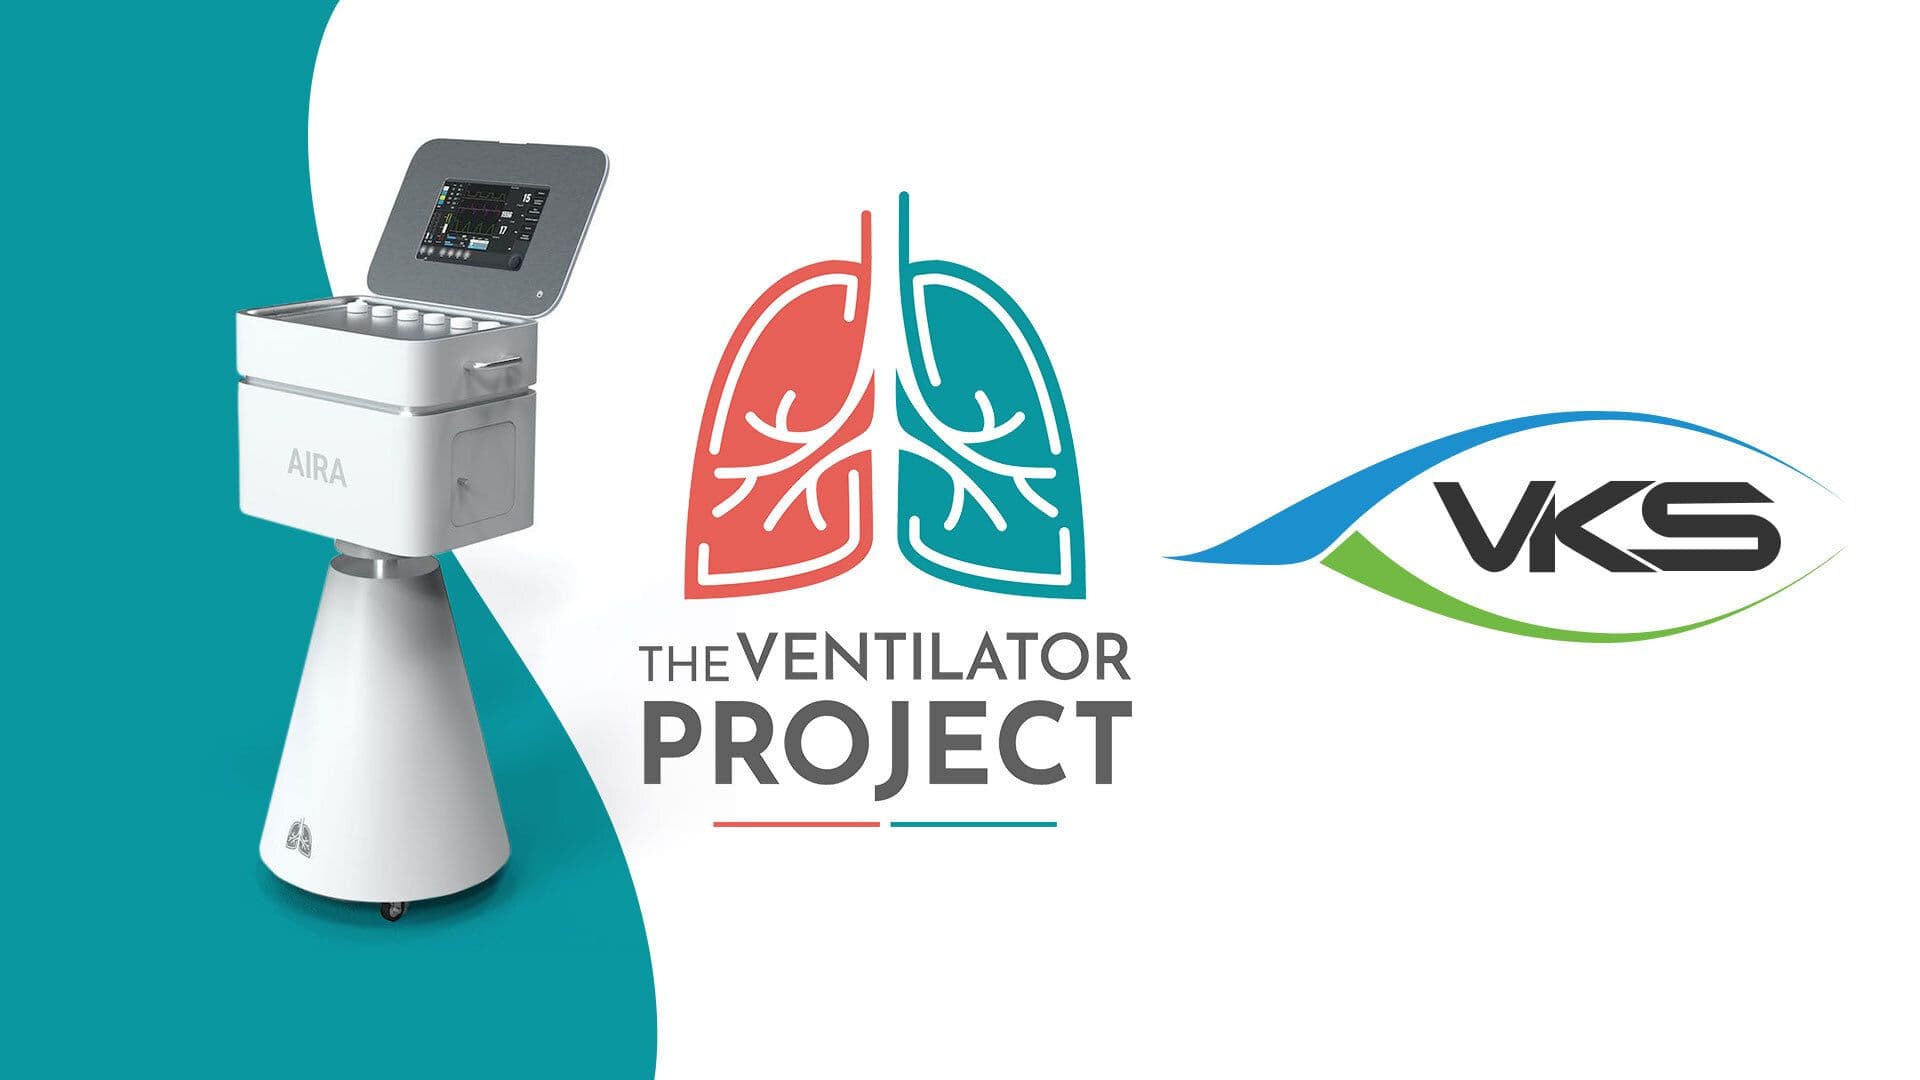 a ventilator project logo and vks logo